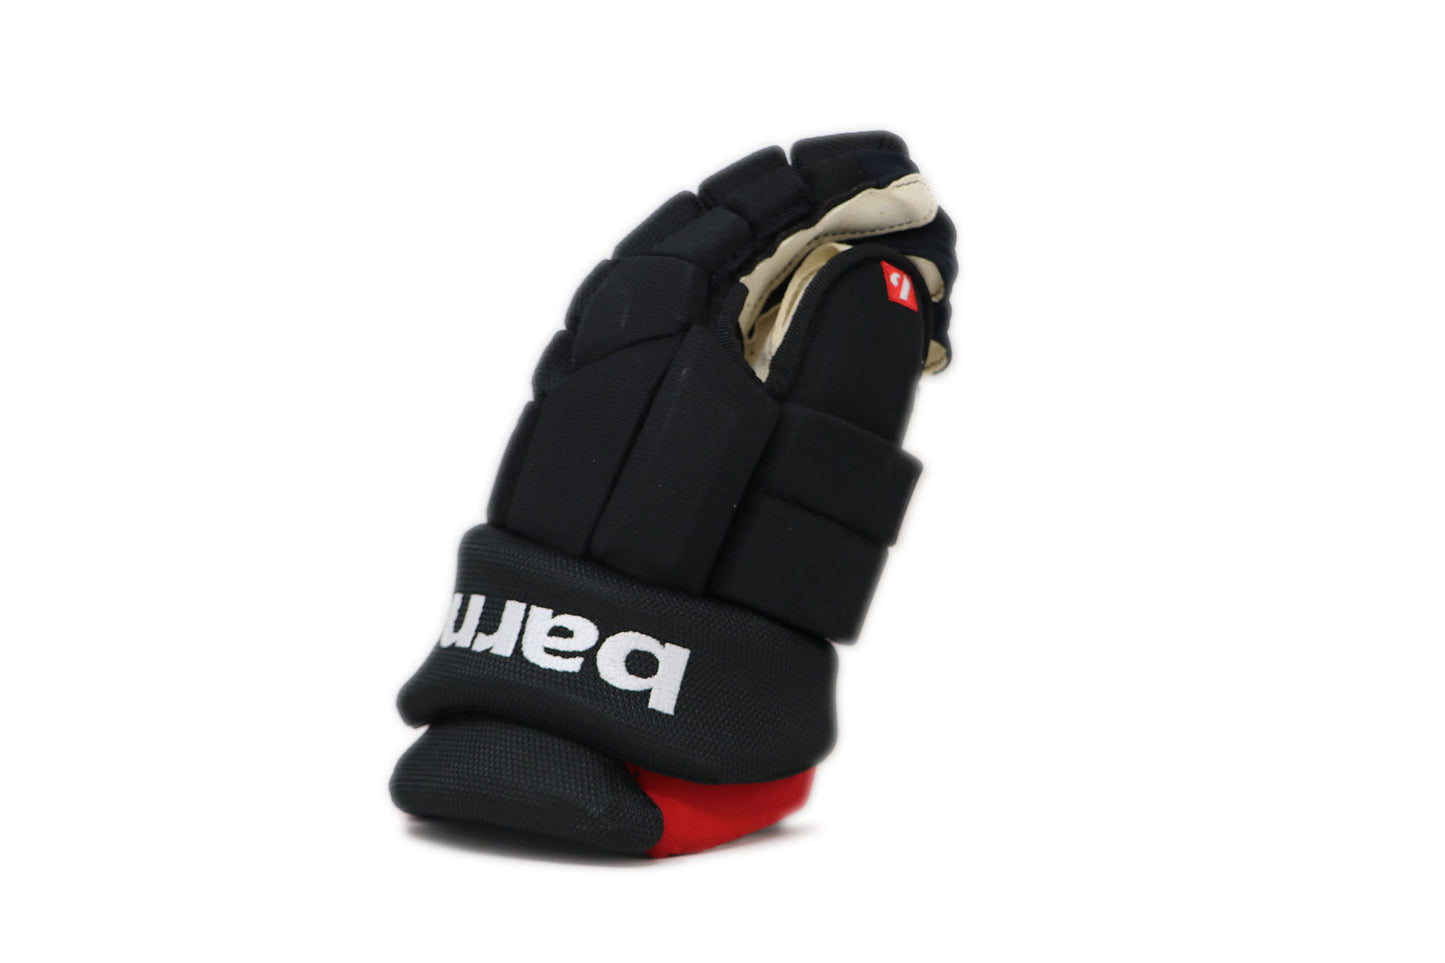 B-7 competition hockey glove